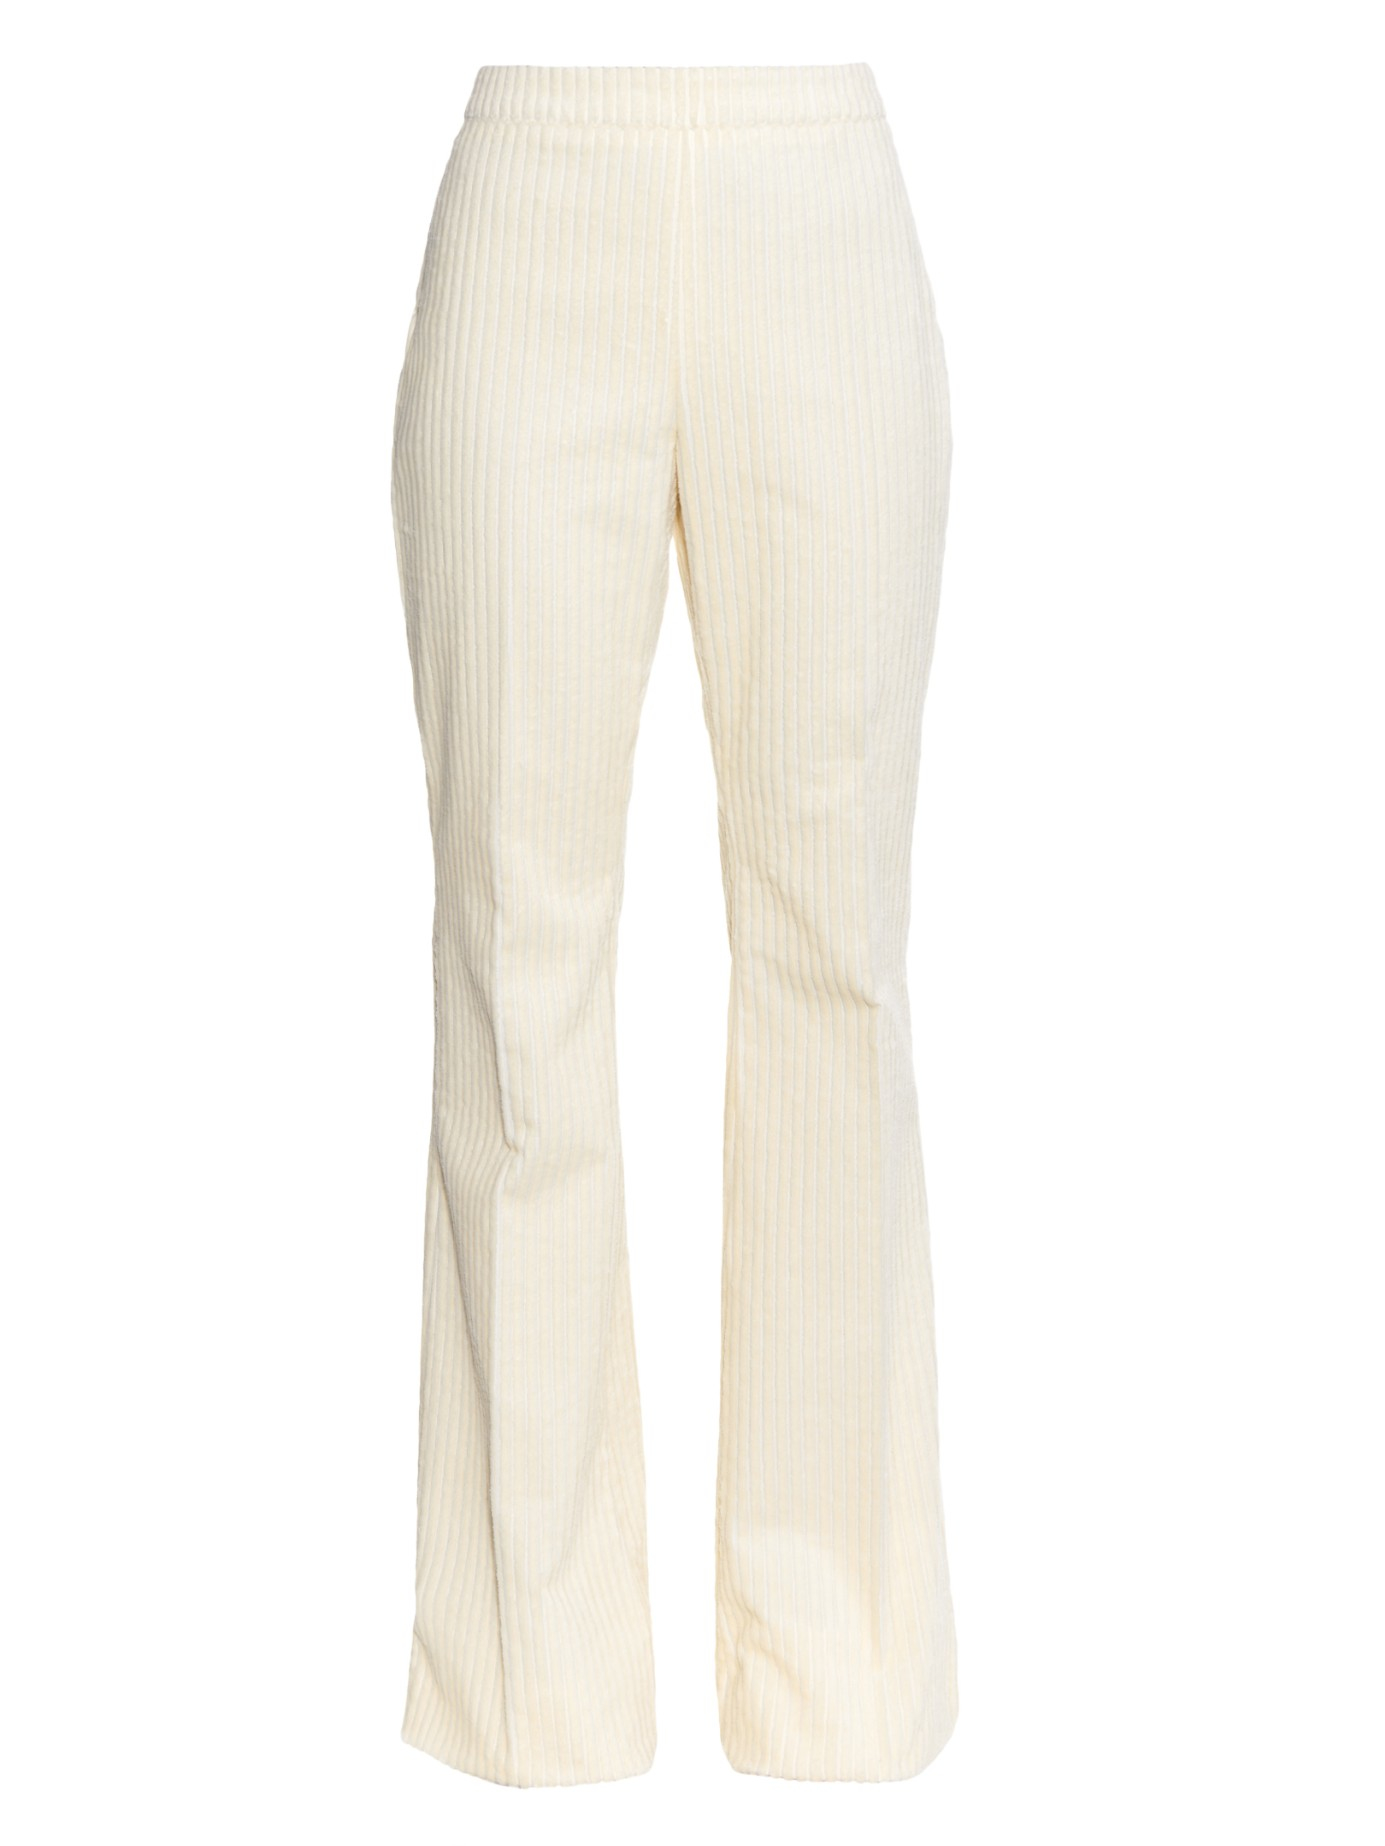 Giambattista Valli Corduroy Tailored Flared Trousers in White - Lyst